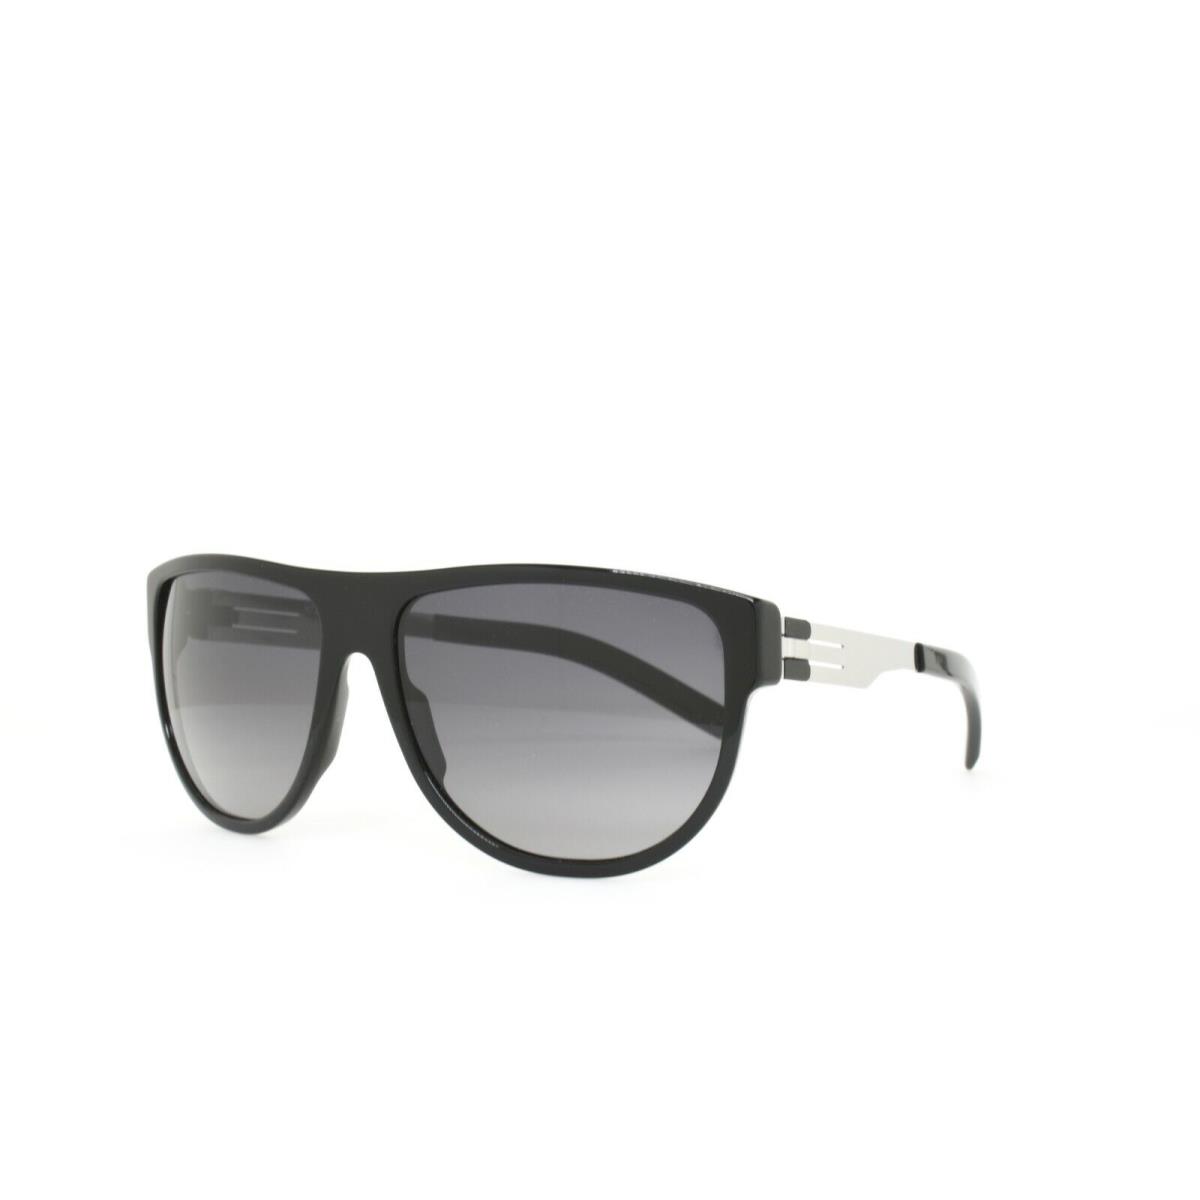 iC Berlin Sunglasses Alexander G. Chrome Obsidian 59-17-145